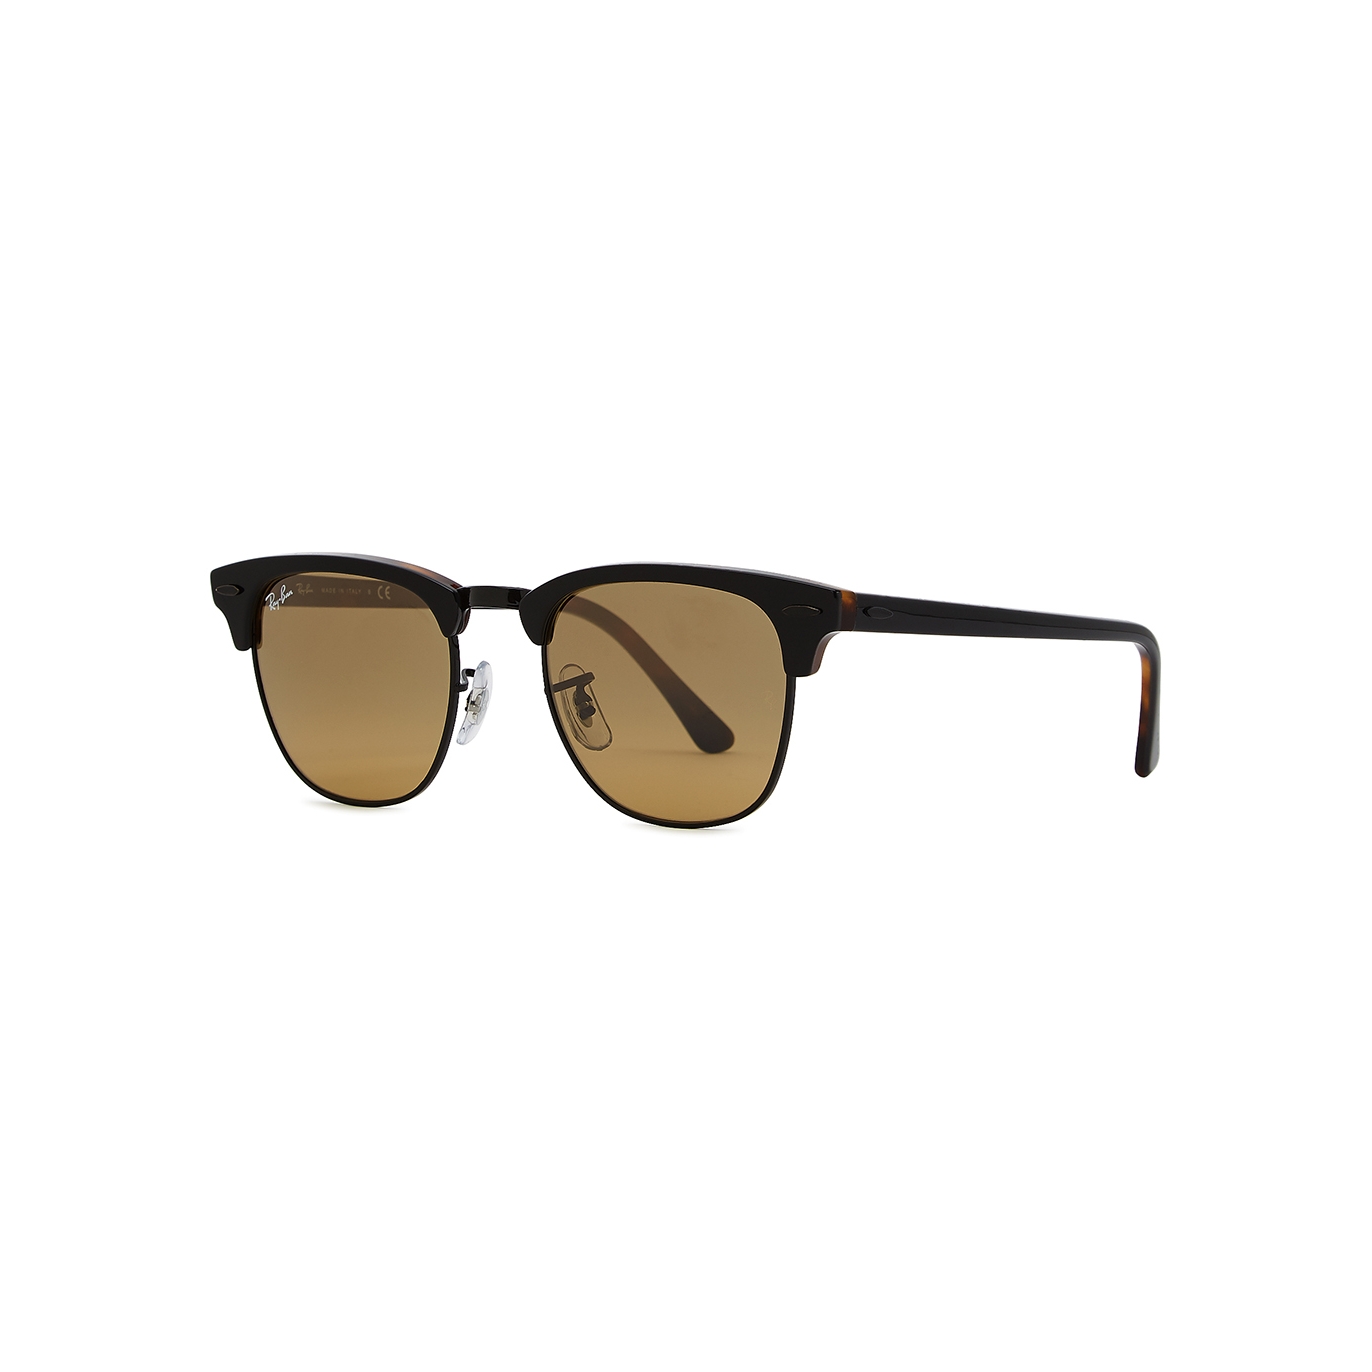 Ray-Ban Black Clubmaster Sunglasses, Sunglasses, Black, Brown Lenses